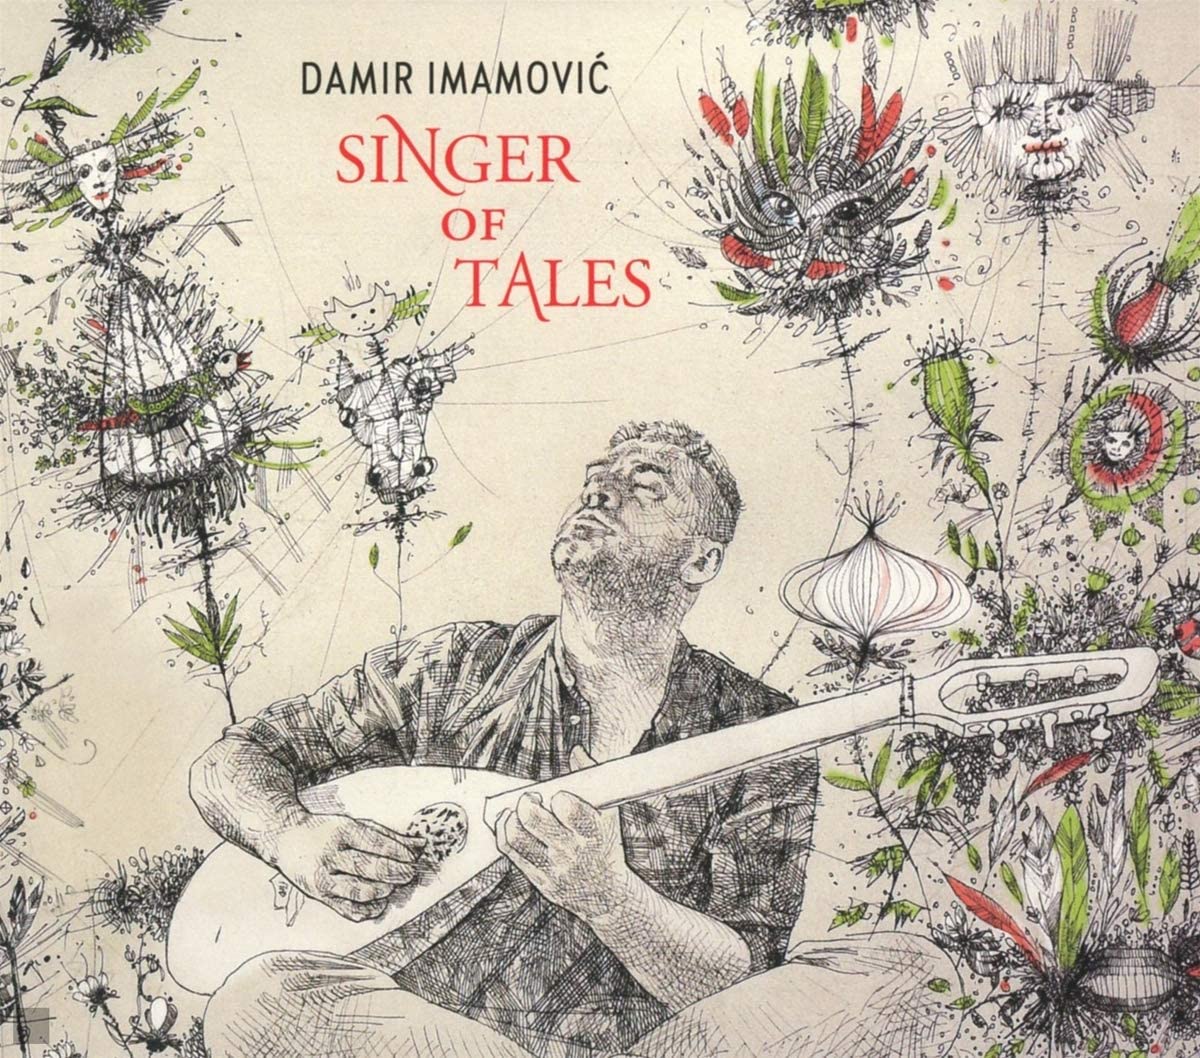 Damir Imamovic - migliori album world 2020